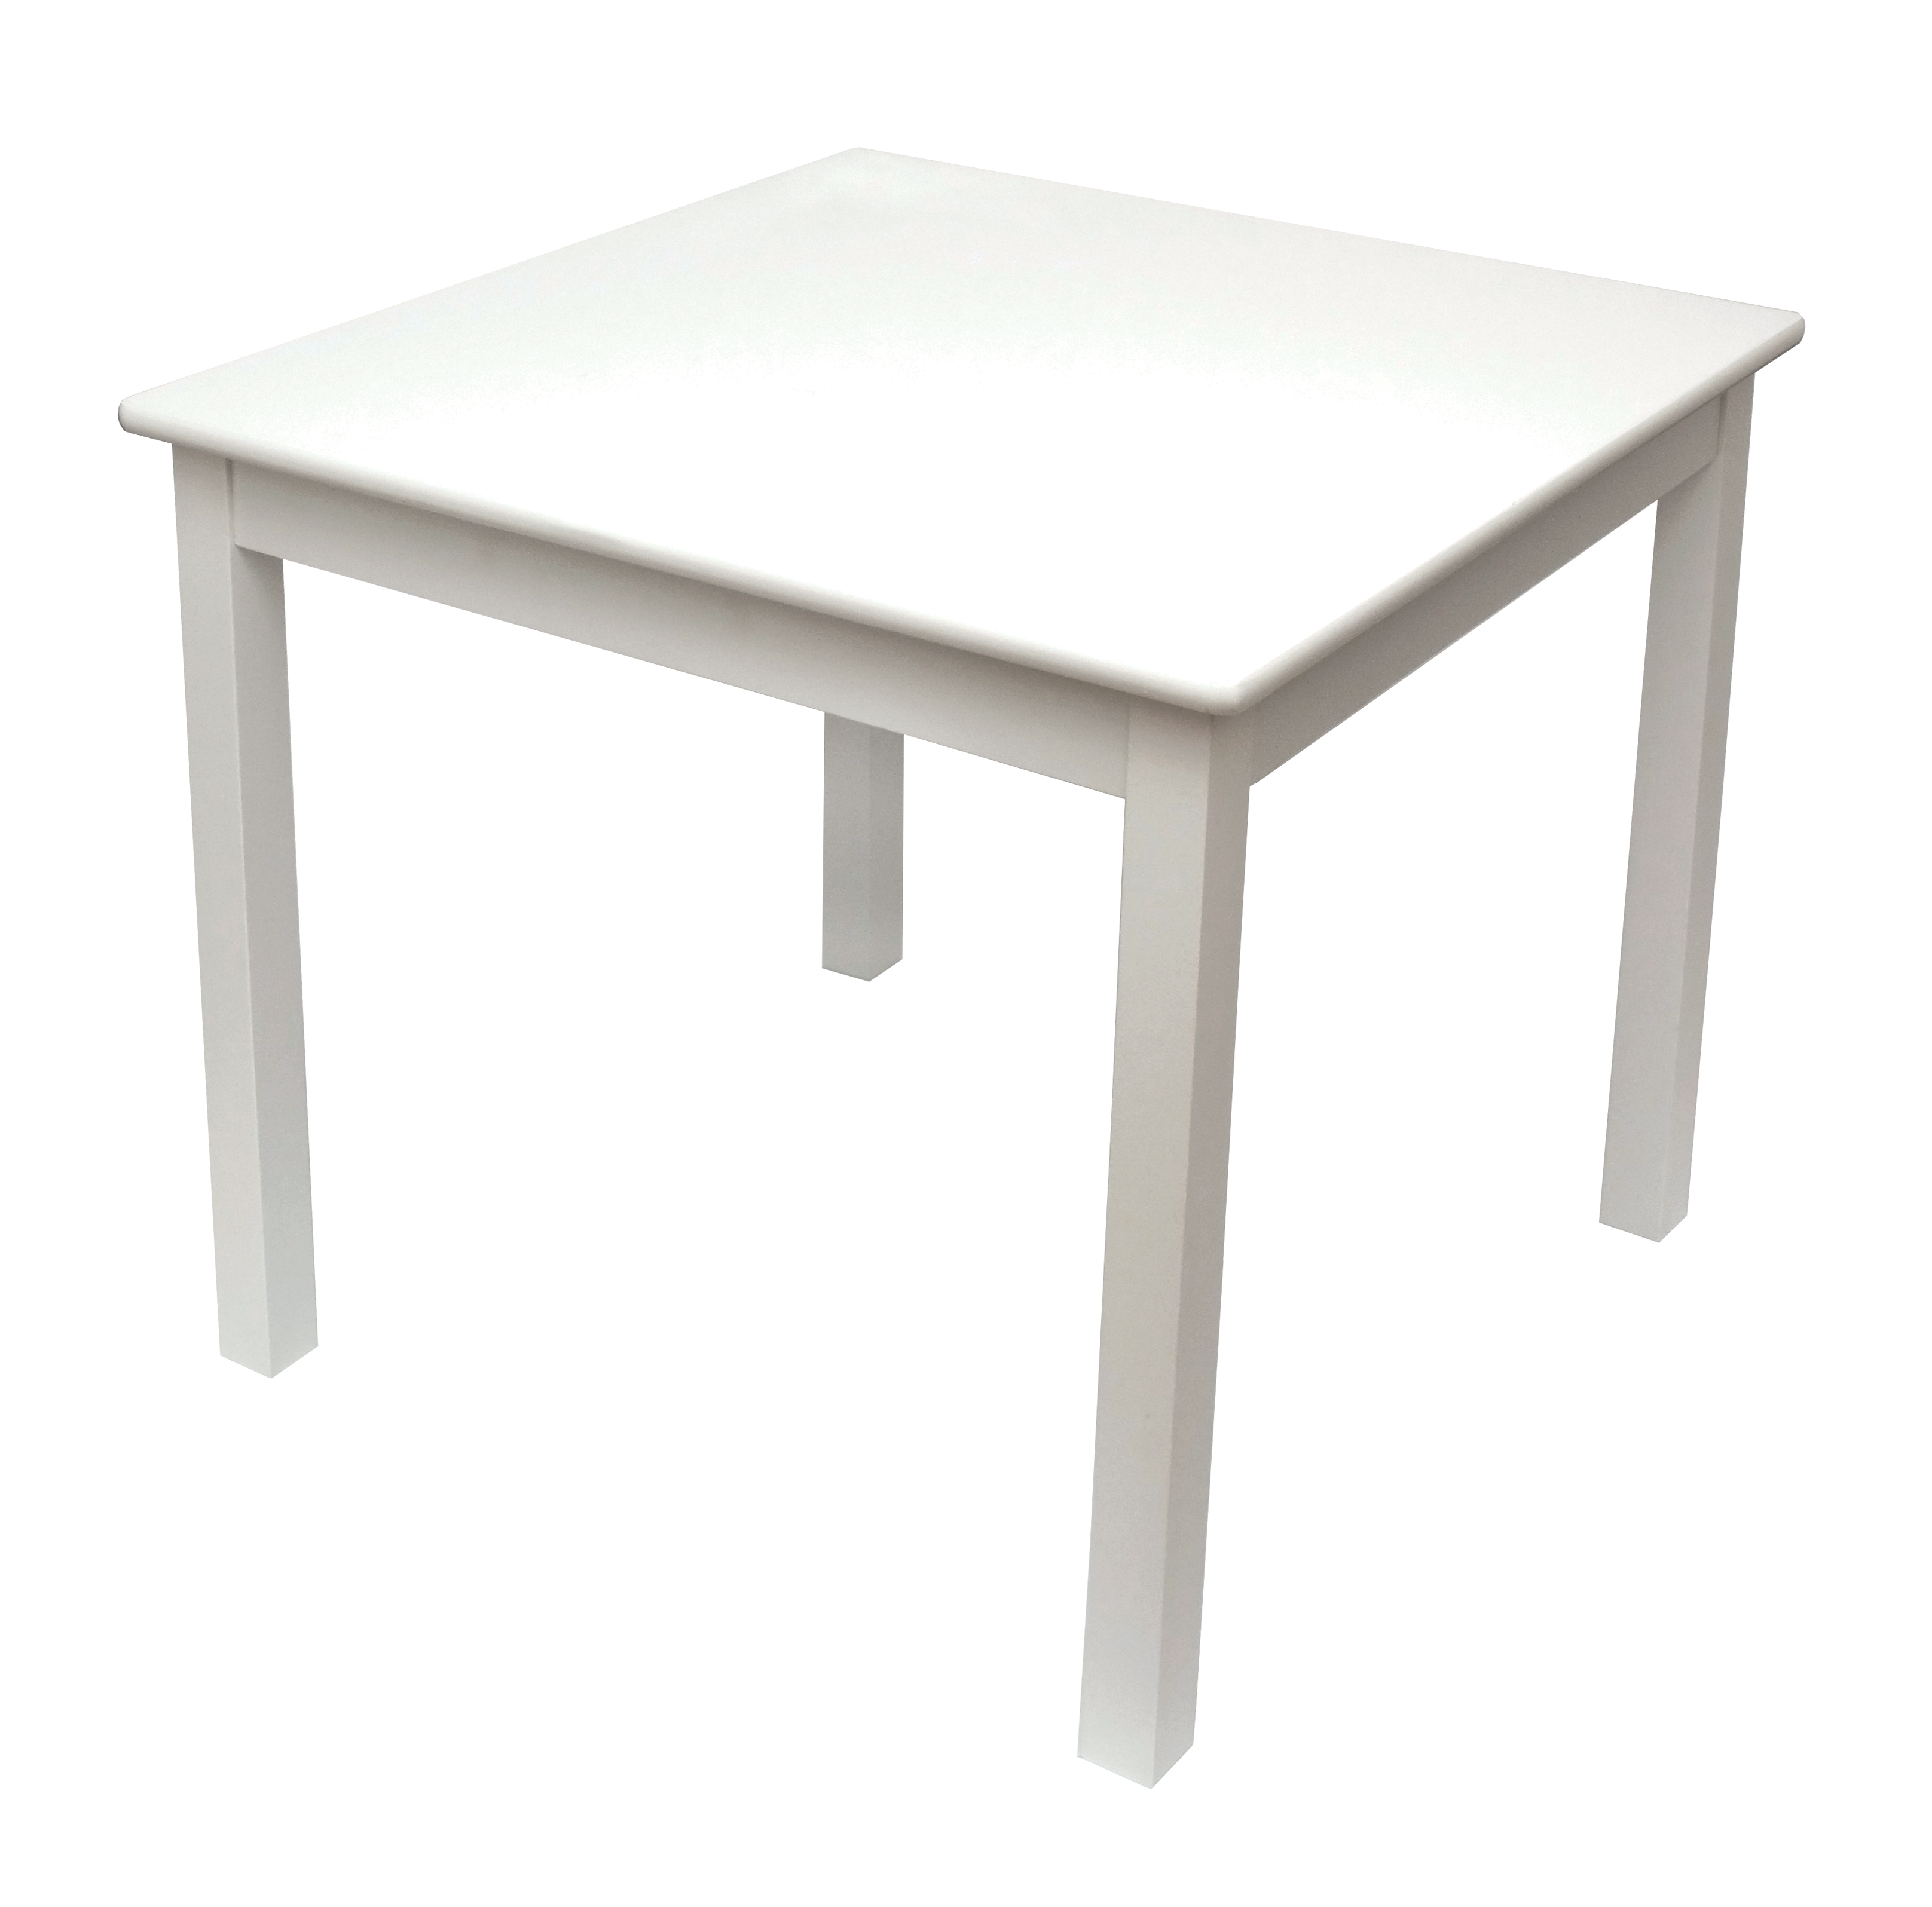 childu0027s white table | lipper international tables OUYYOYN